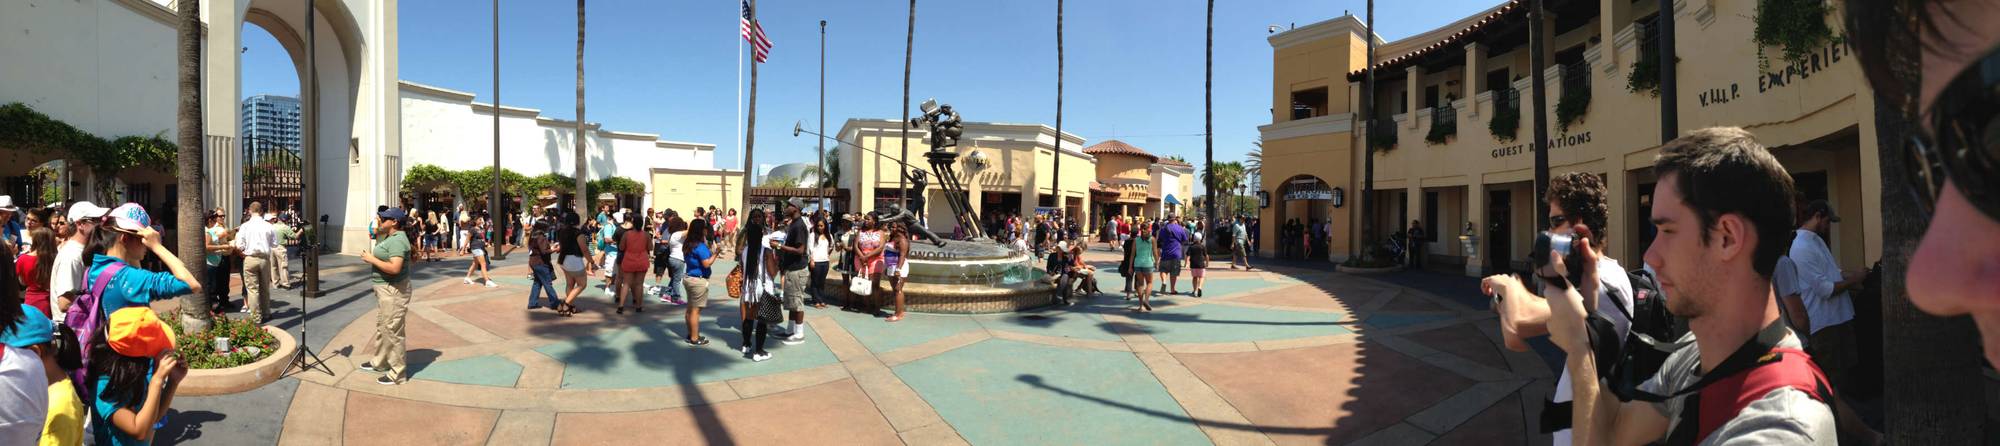 Panorama of the Universal Studios reception